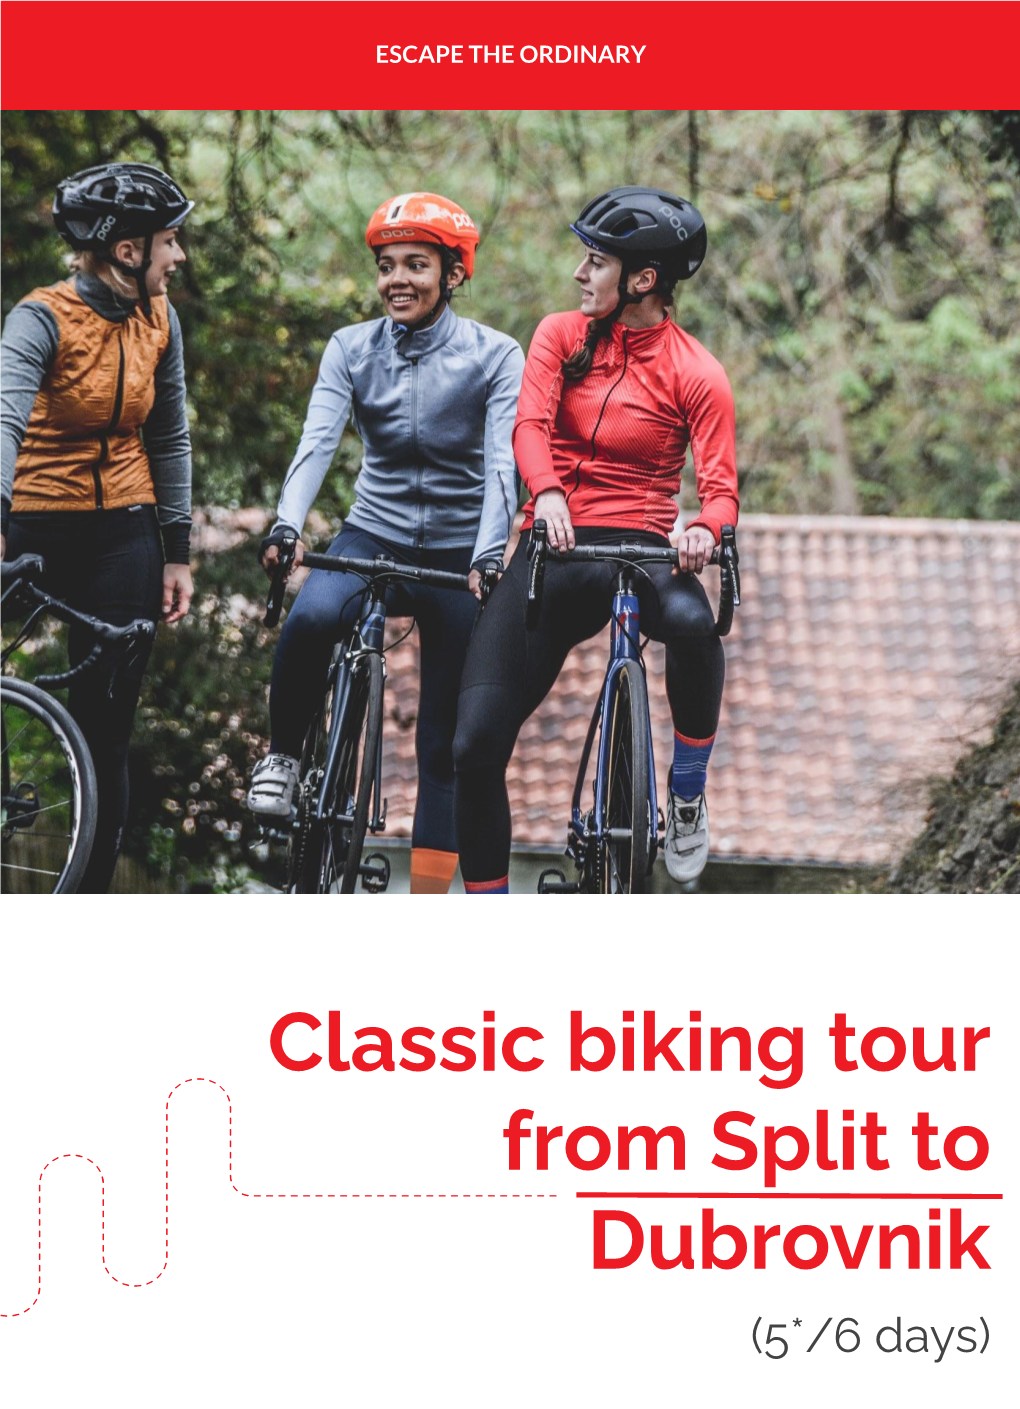 Classic Biking Tour from Split to Dubrovnik (5*/6 Days) DAY 1